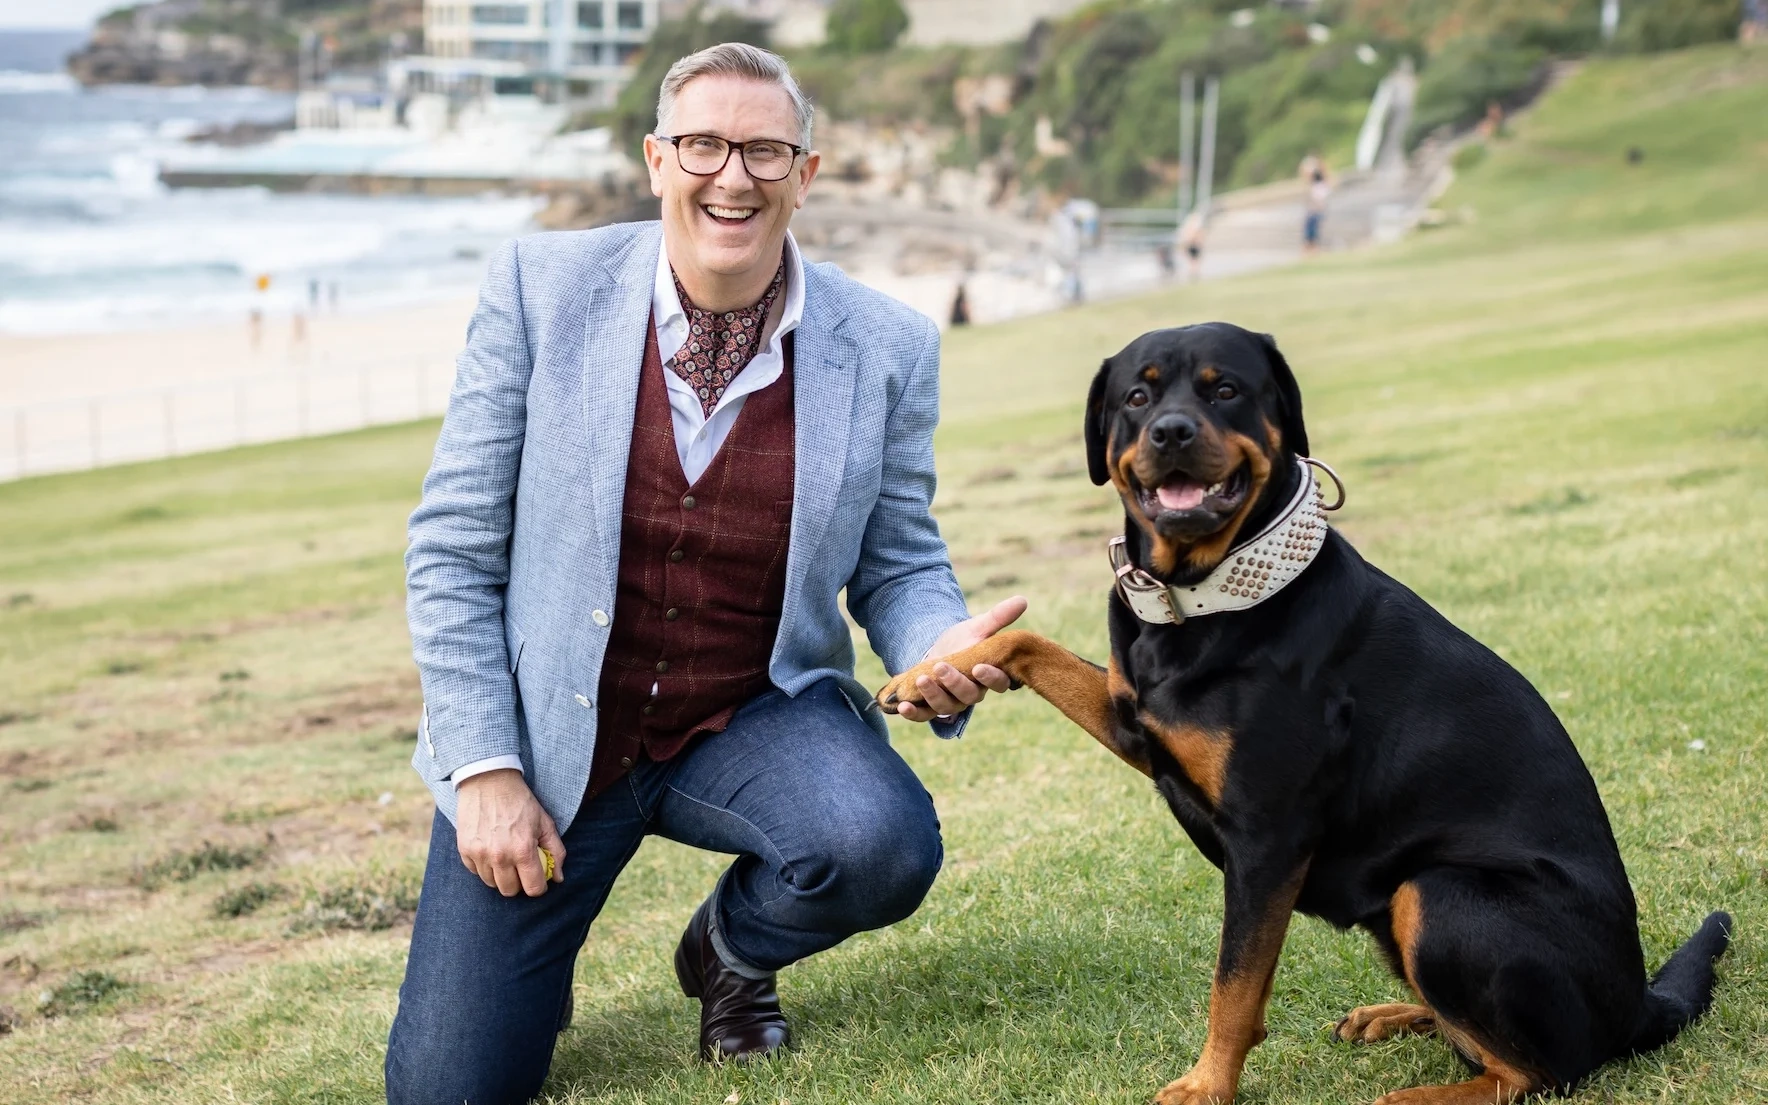 Dogs Behaving (Very) Badly Australia